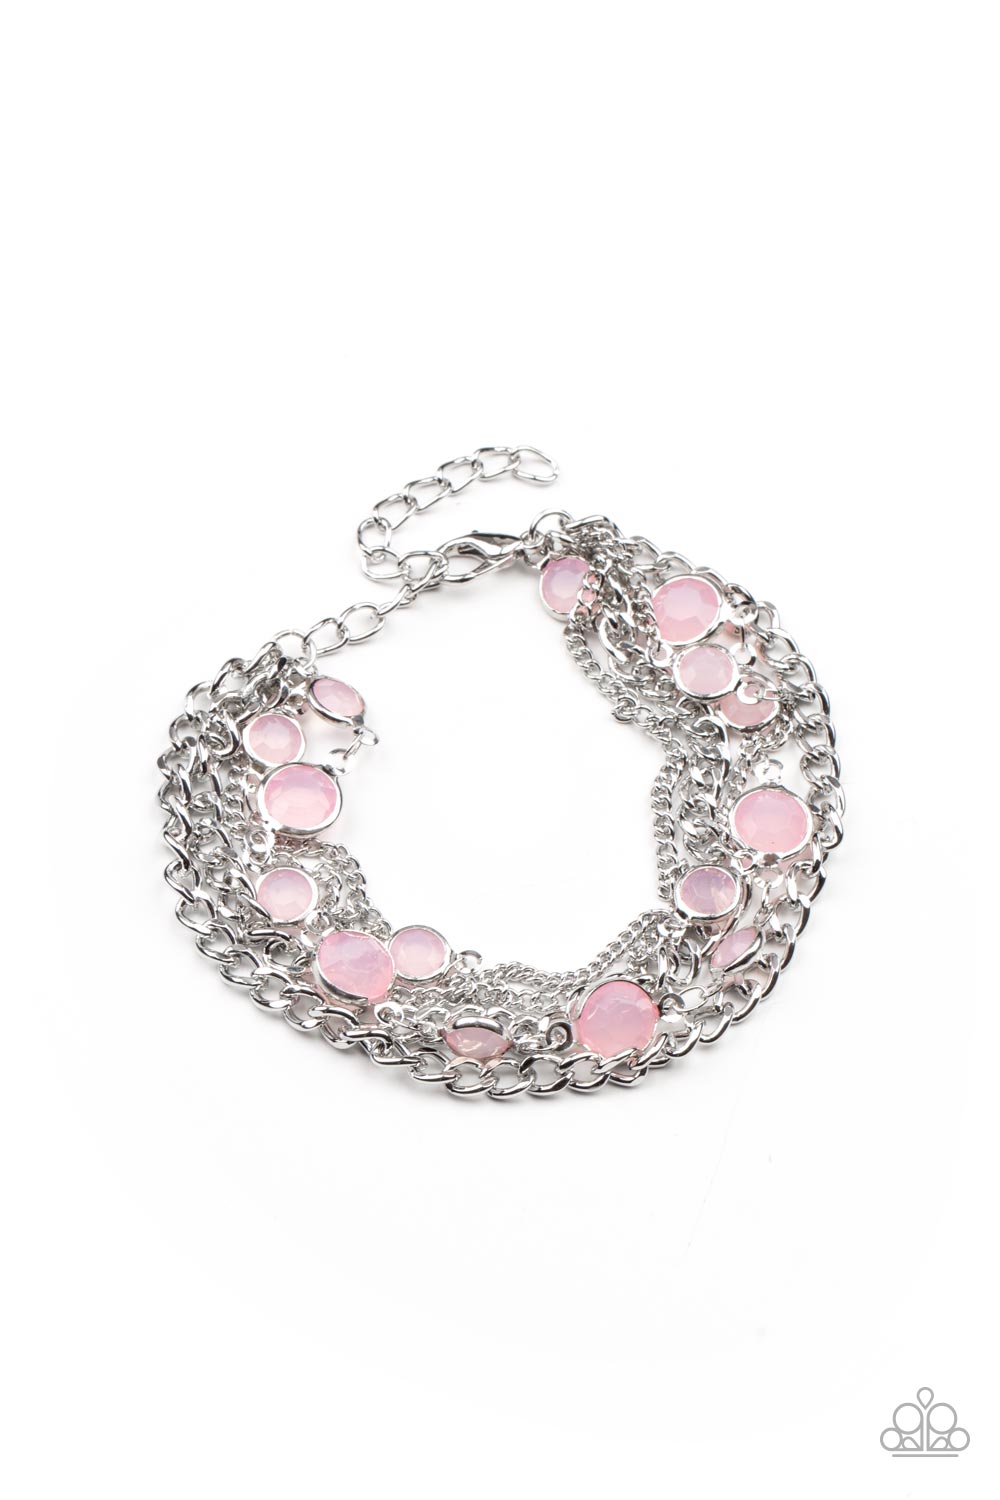 Goddess Getaway Necklace Set & Glossy Goddess Bracelet - Pink Combo - Princess Glam Shop